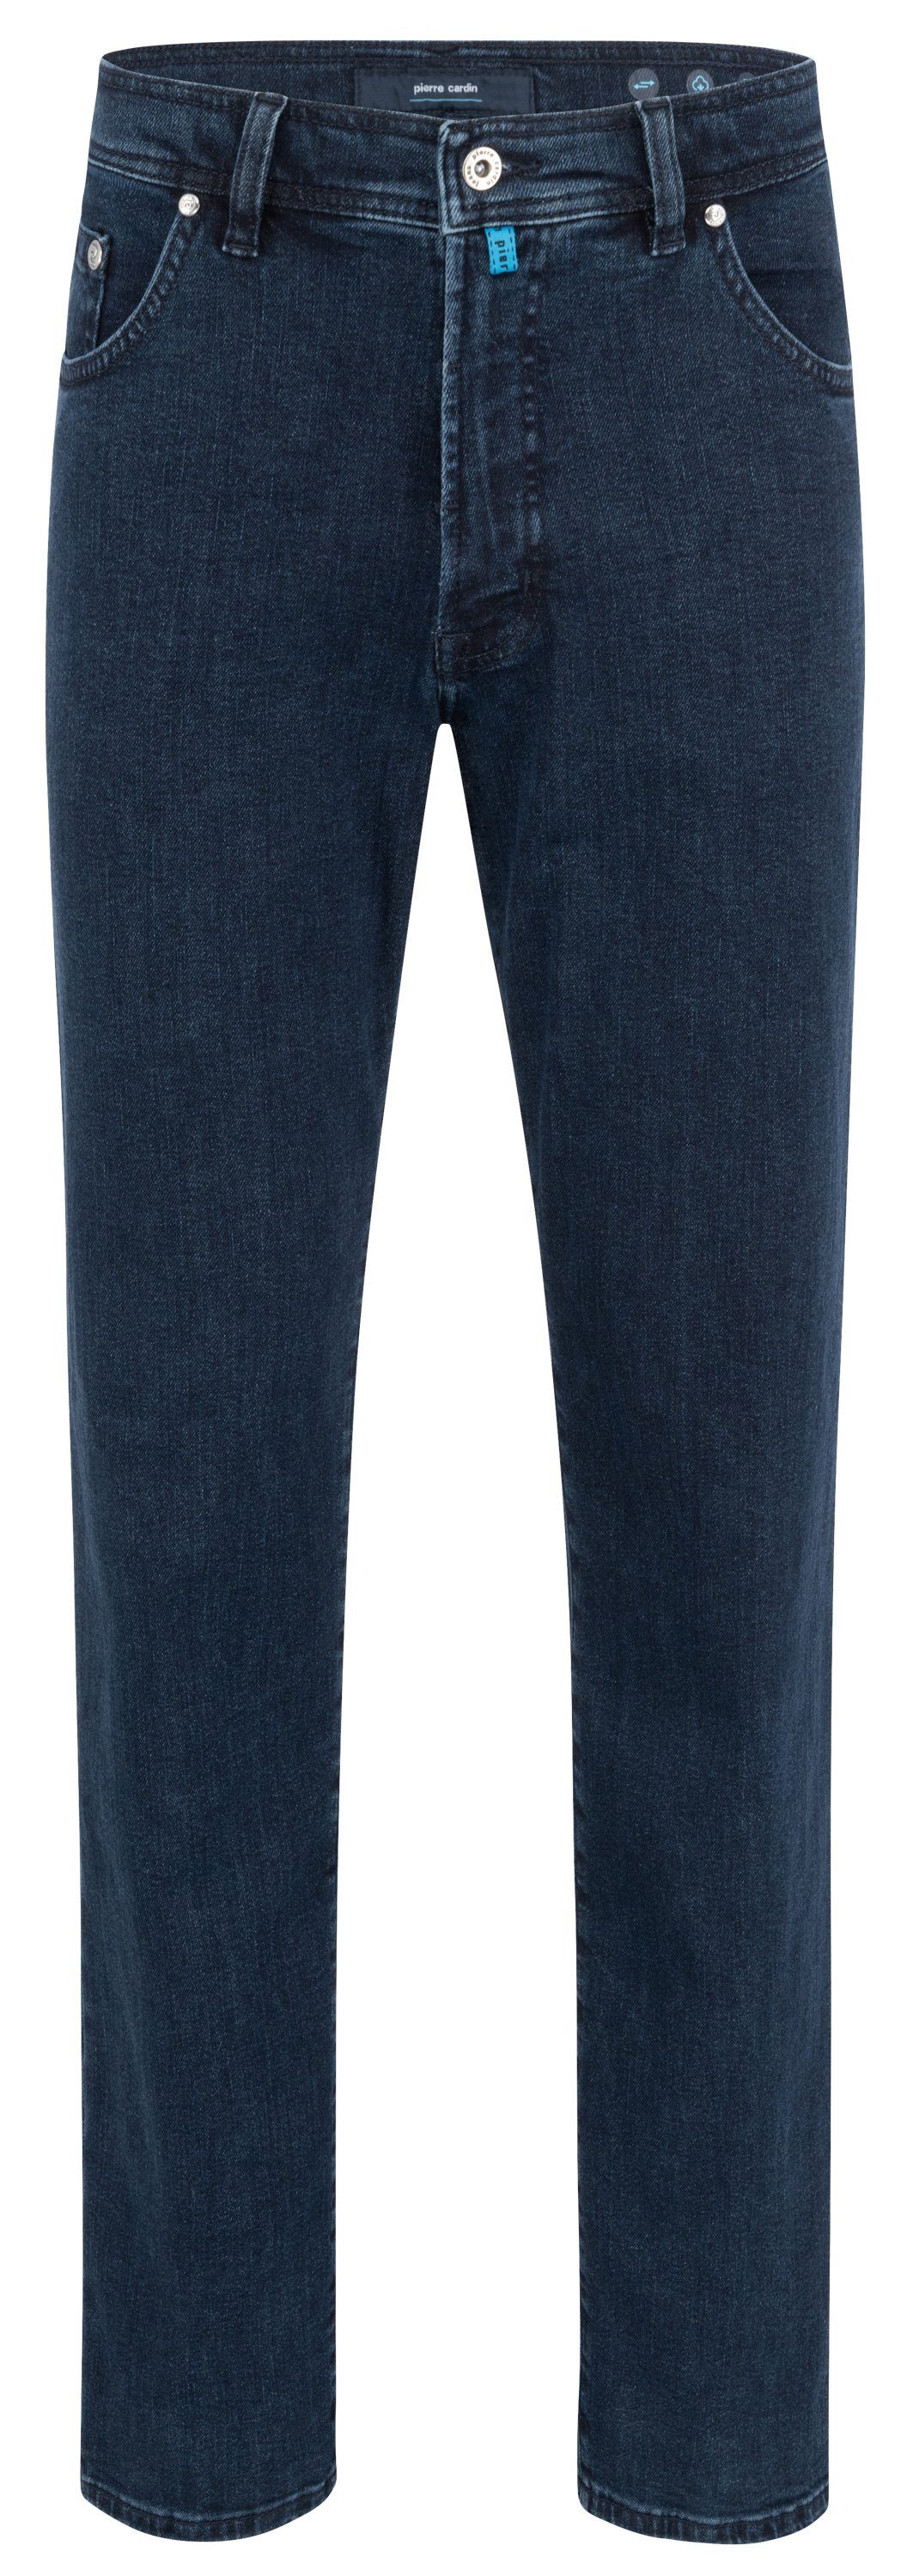 Pierre Cardin 5-Pocket-Jeans PIERRE CARDIN DIJON dark blue stonewash 32310 7724.6811